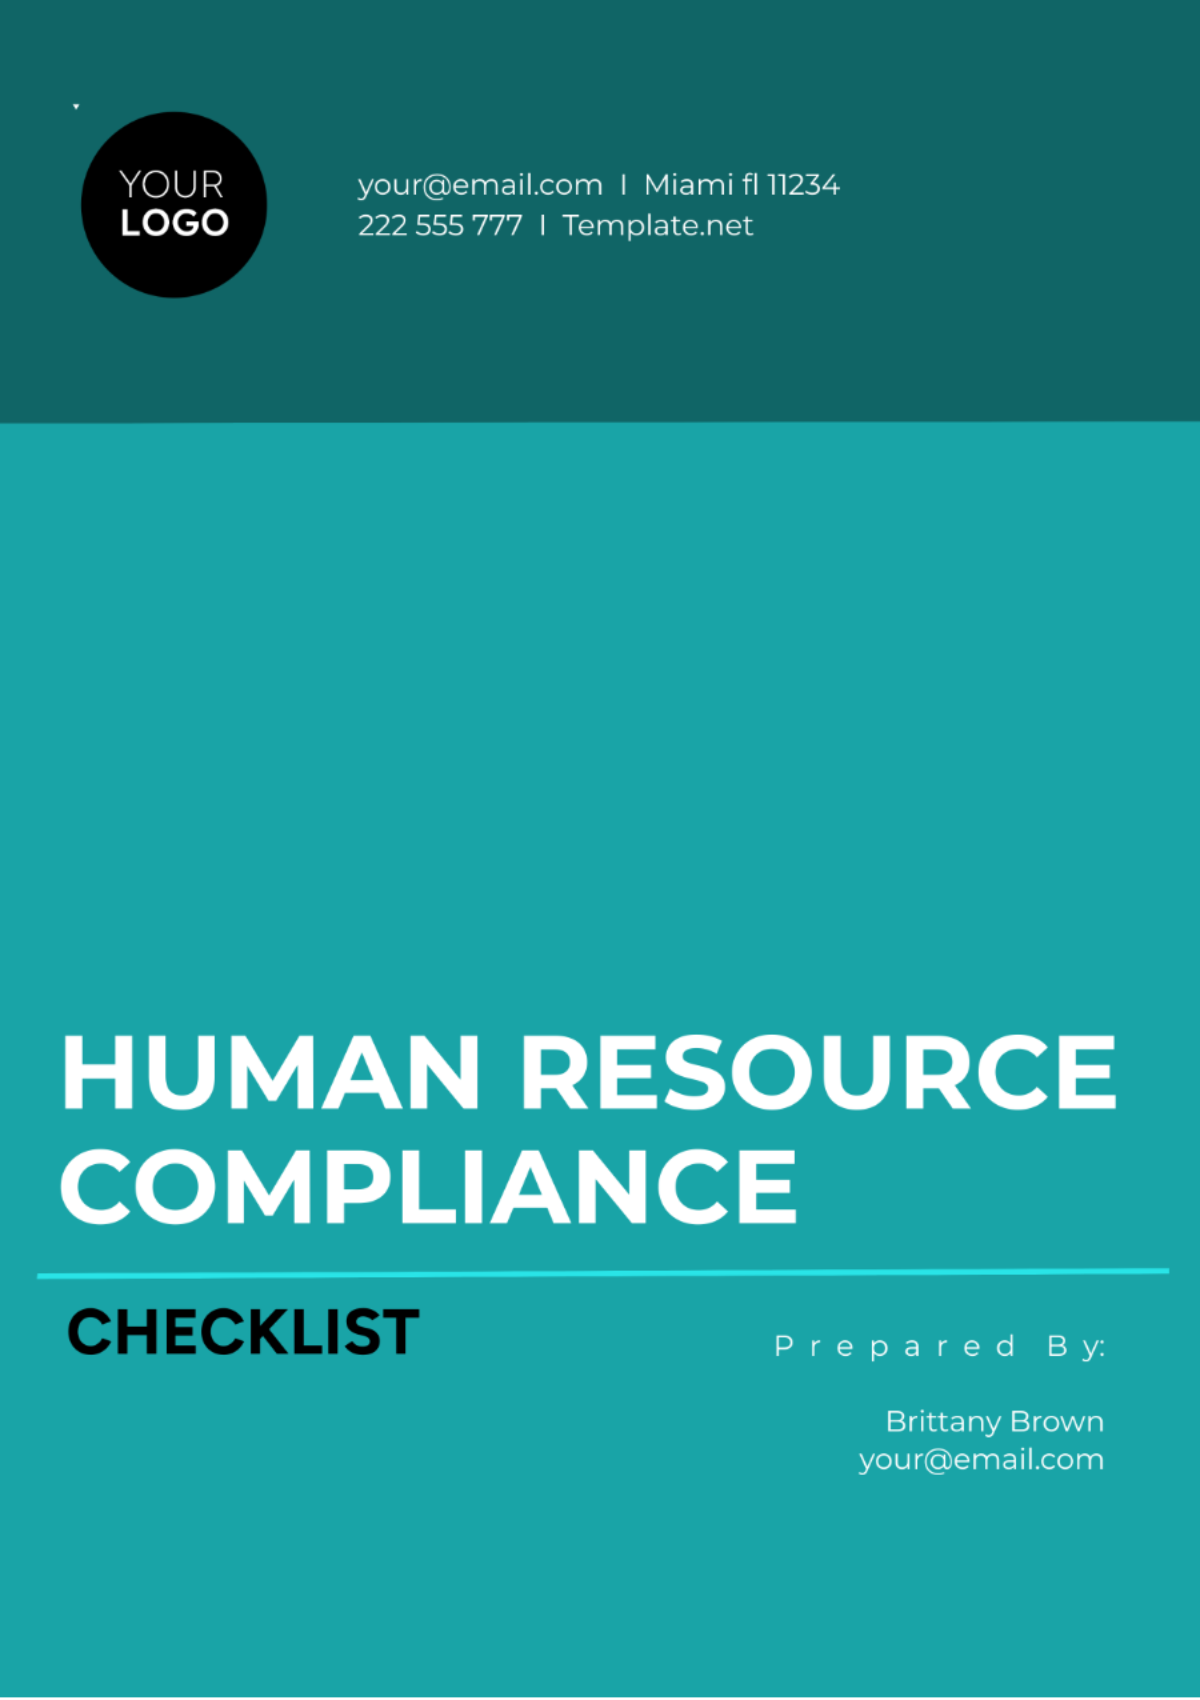 Human Resource Compliance Checklist Template